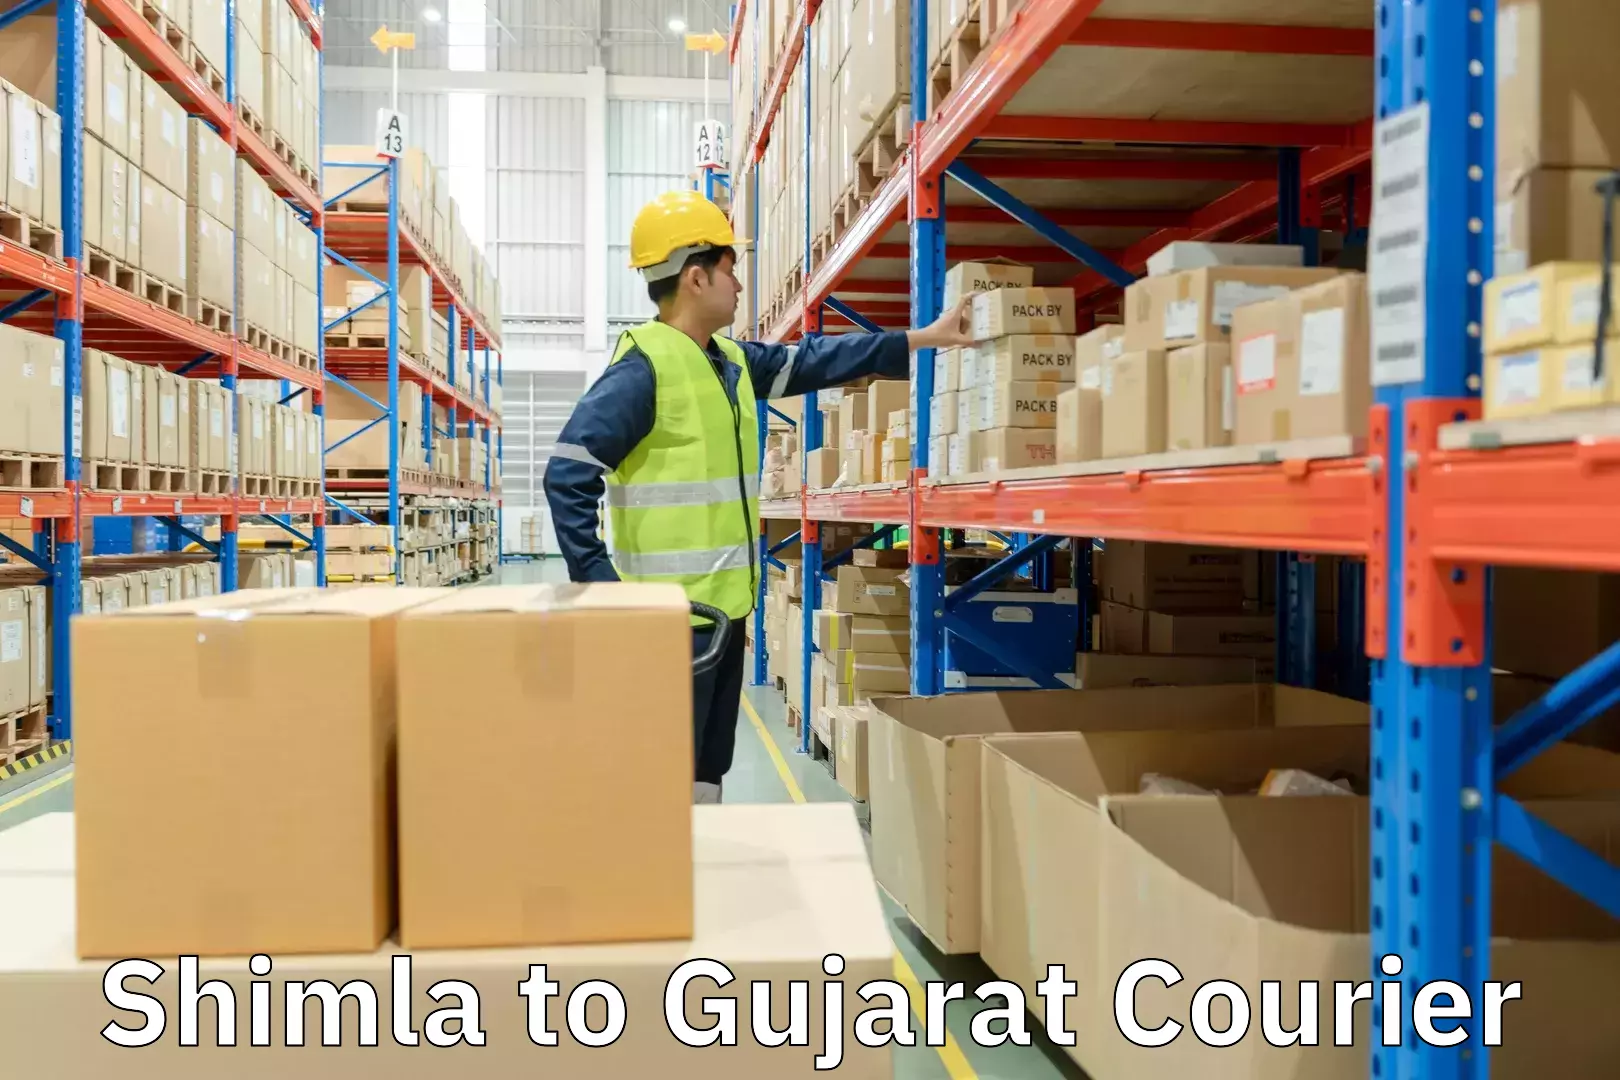 Courier service comparison Shimla to Gujarat